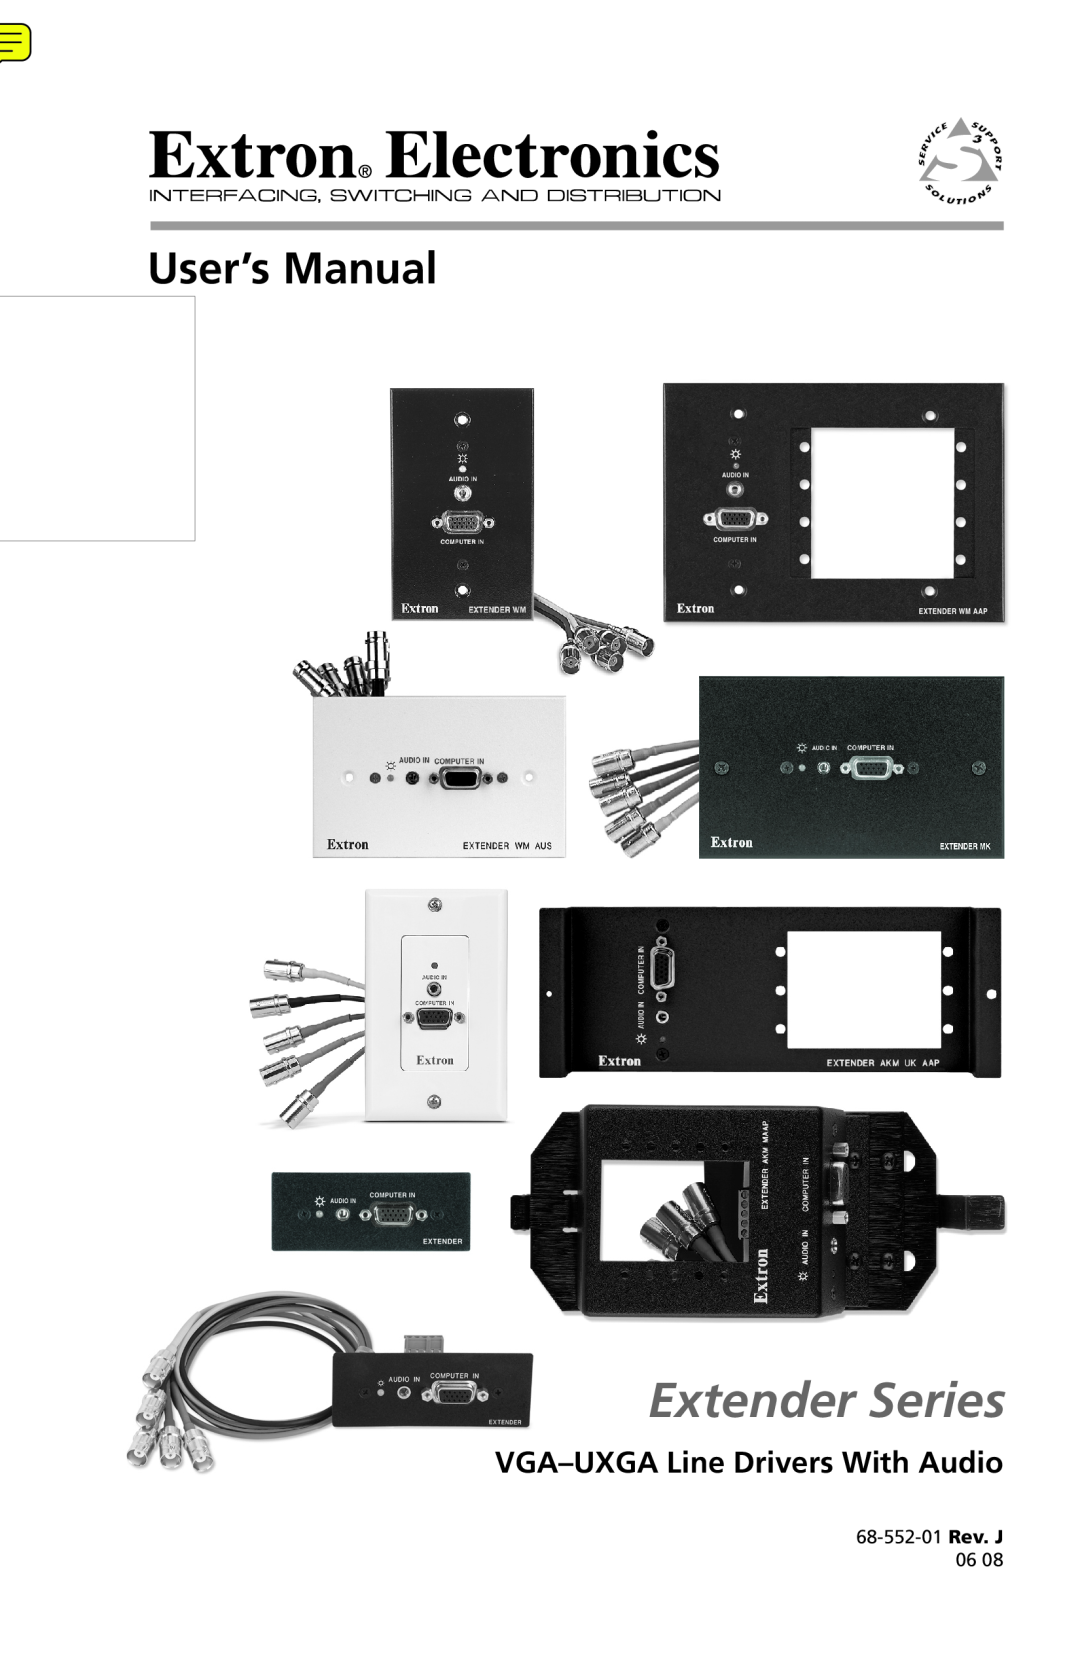 Extron electronic Extender Series manual VGA-UXGA Line Drivers With Audio, User’s Manual 